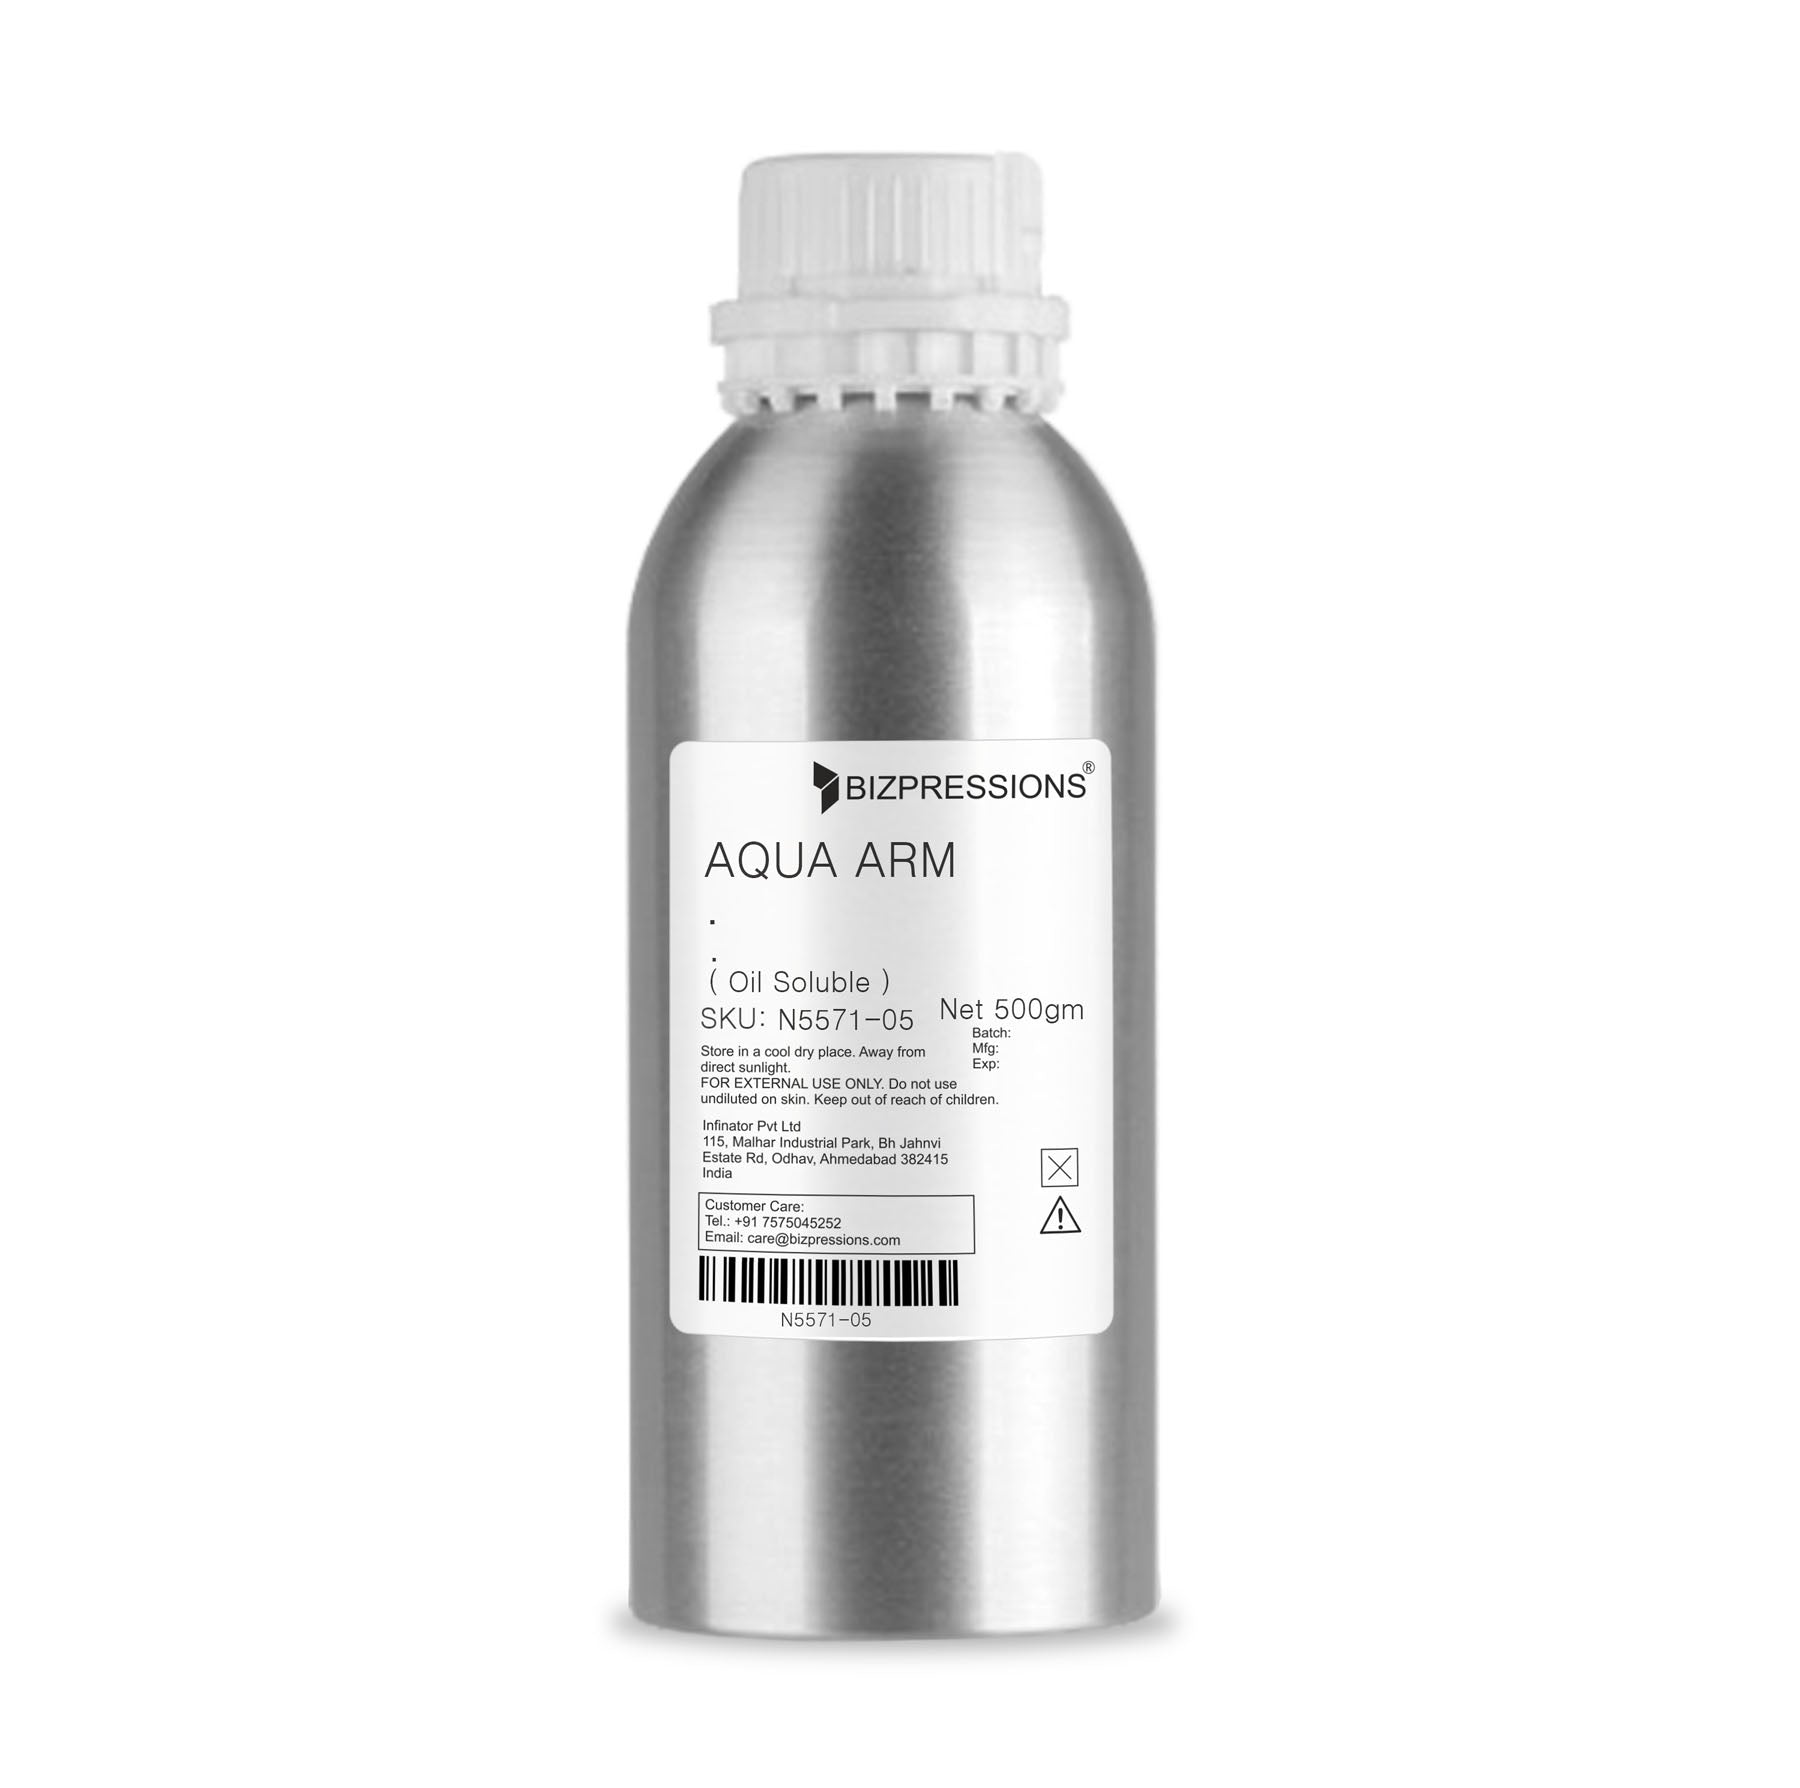 AQUA ARM - Fragrance ( Oil Soluble ) - 500 gm